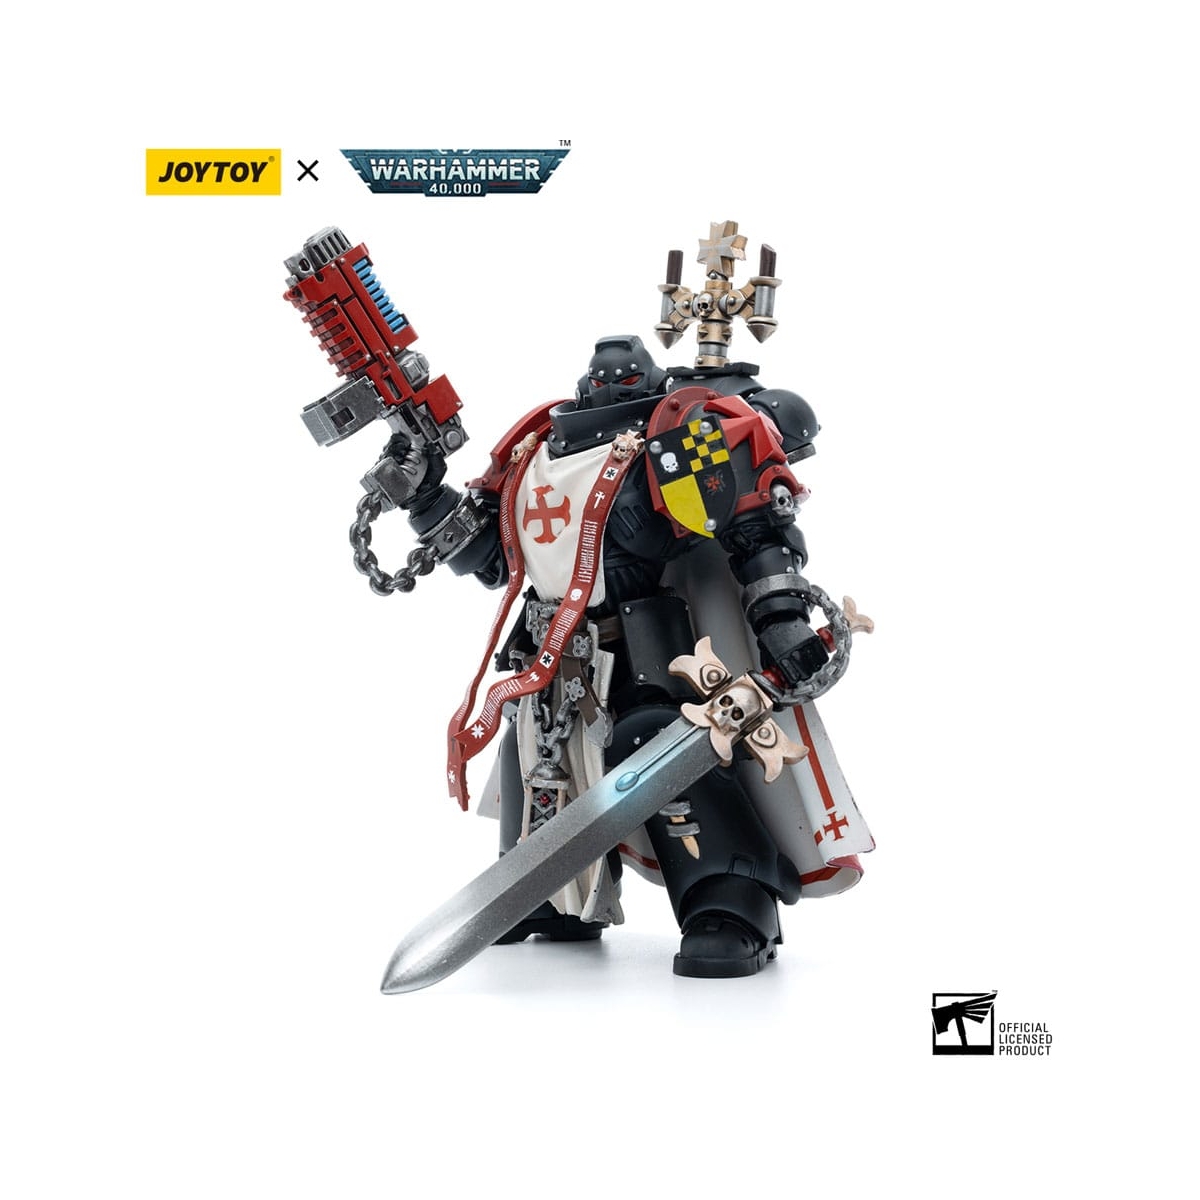 Figurine articulée Joy toy (cn) Warhammer 40k pack 4 figurines 1/18 Black  Templars